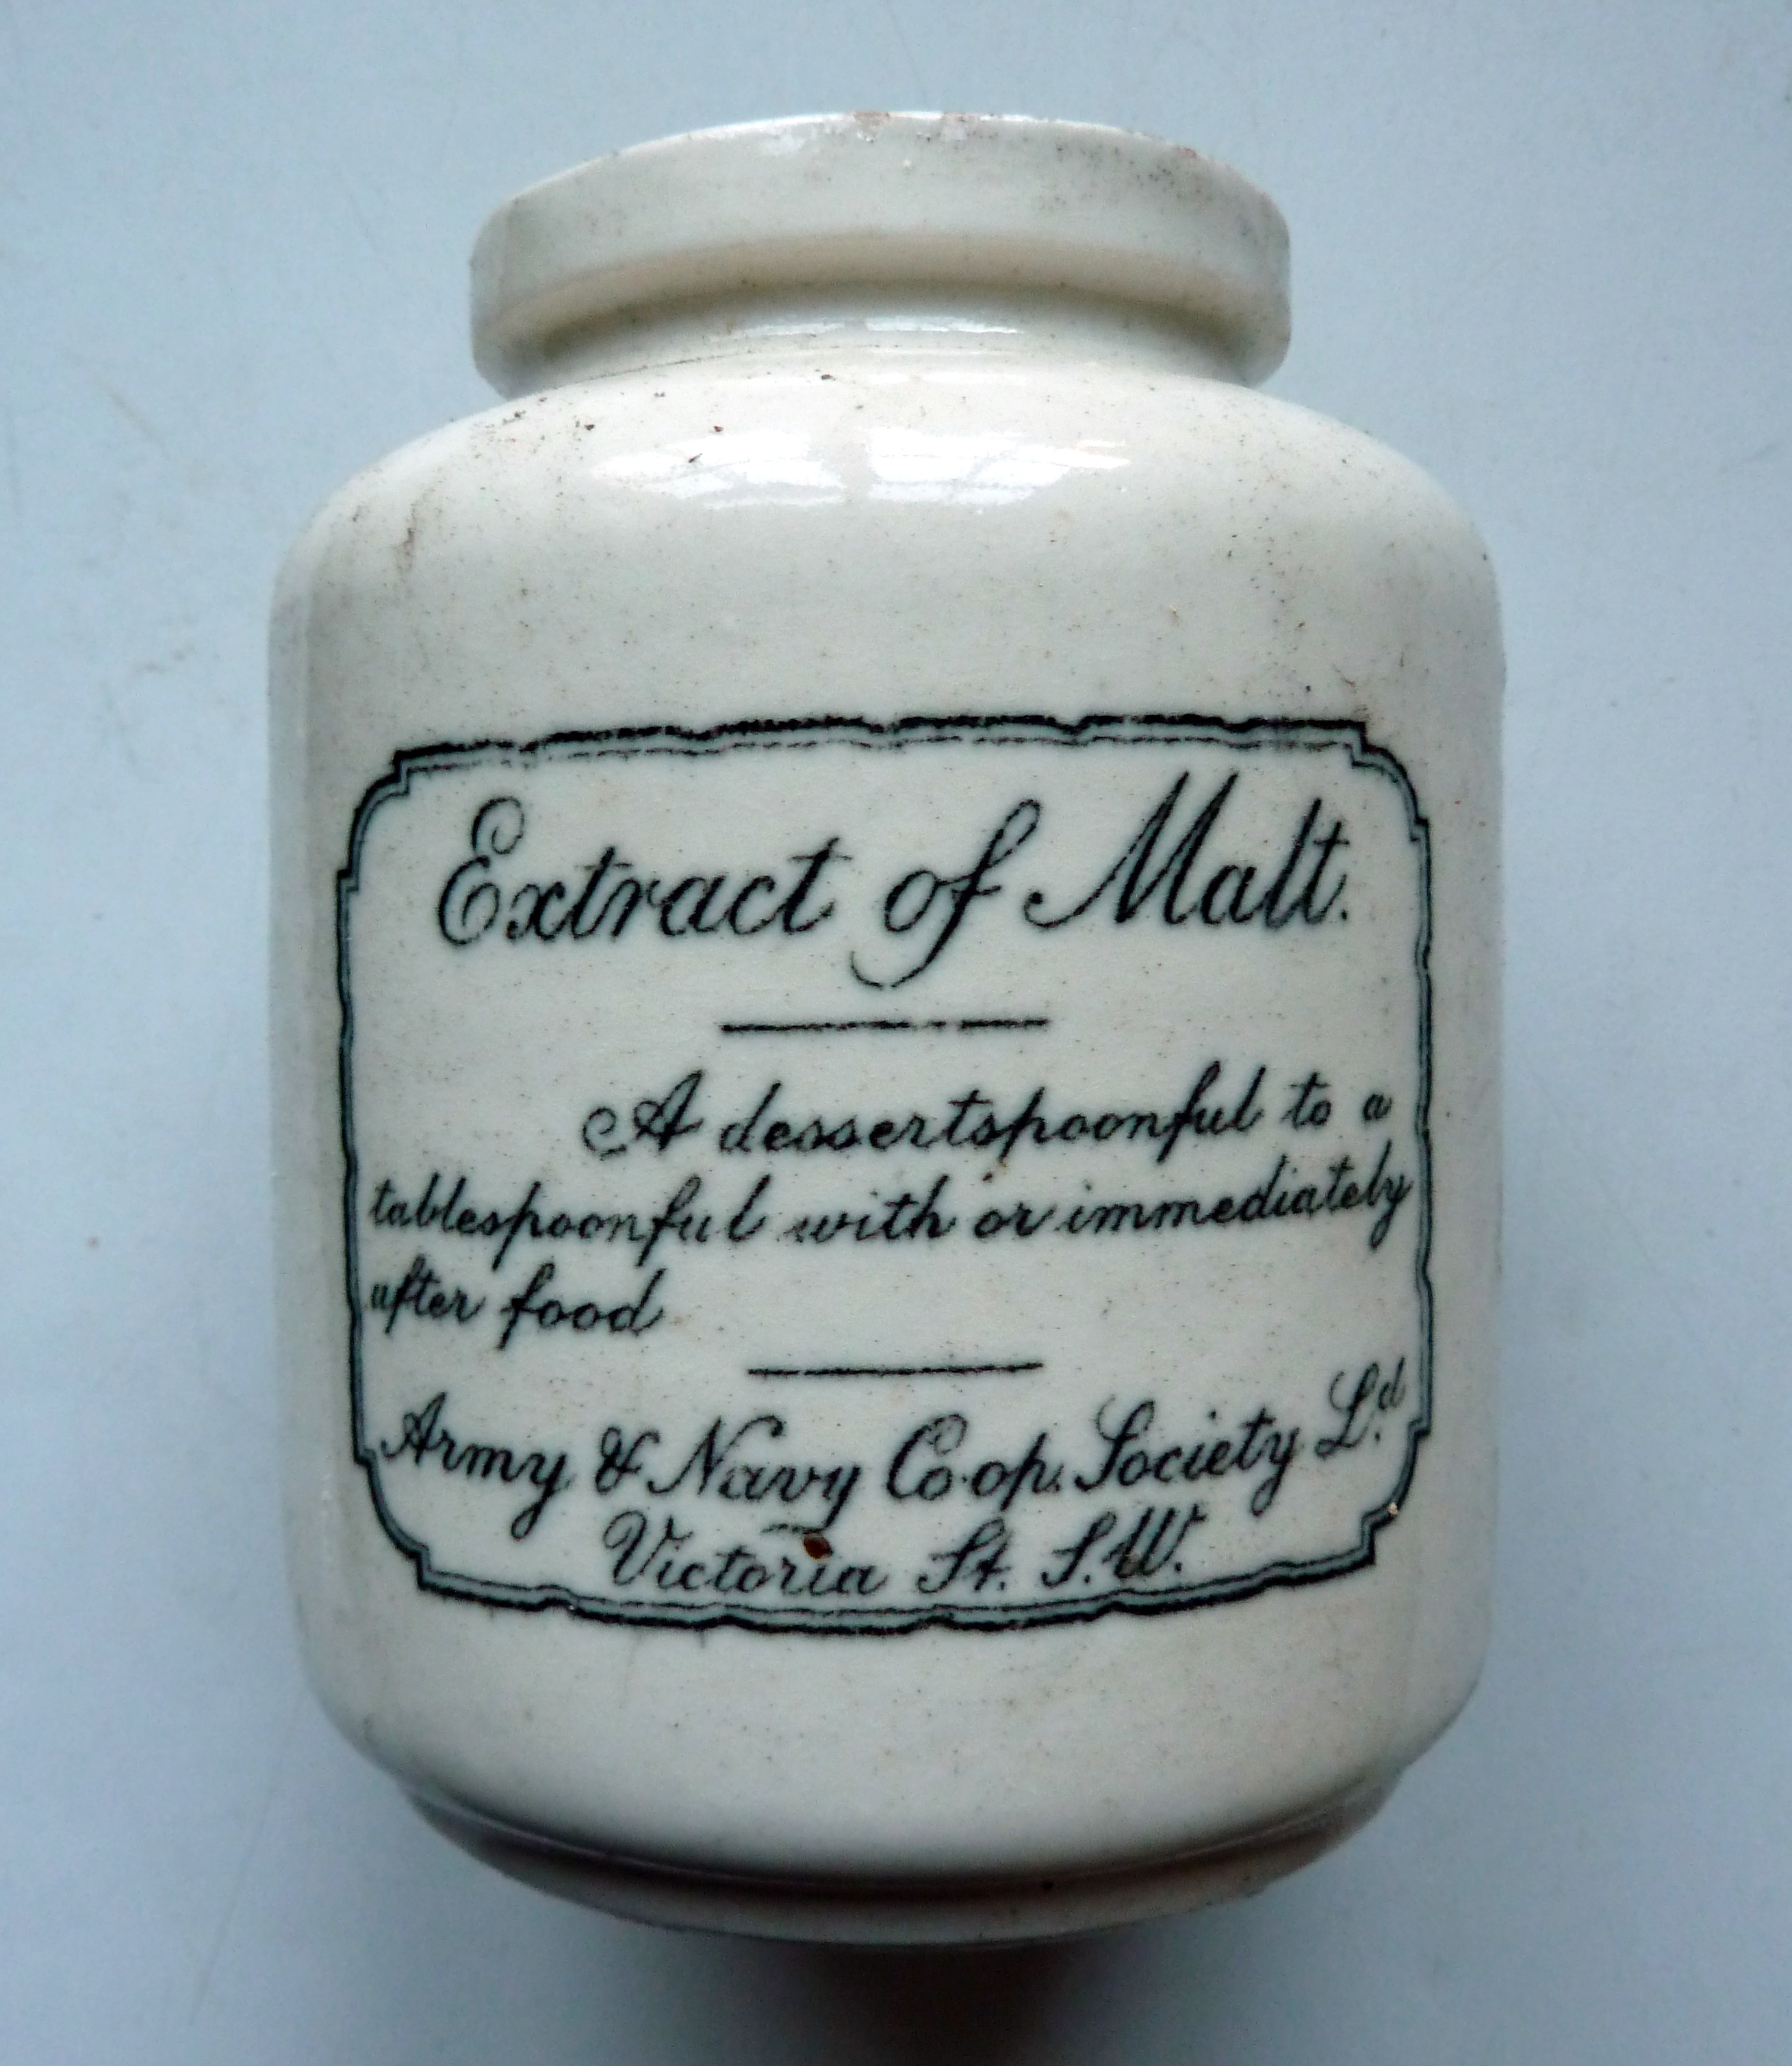 Extract of Malt pot